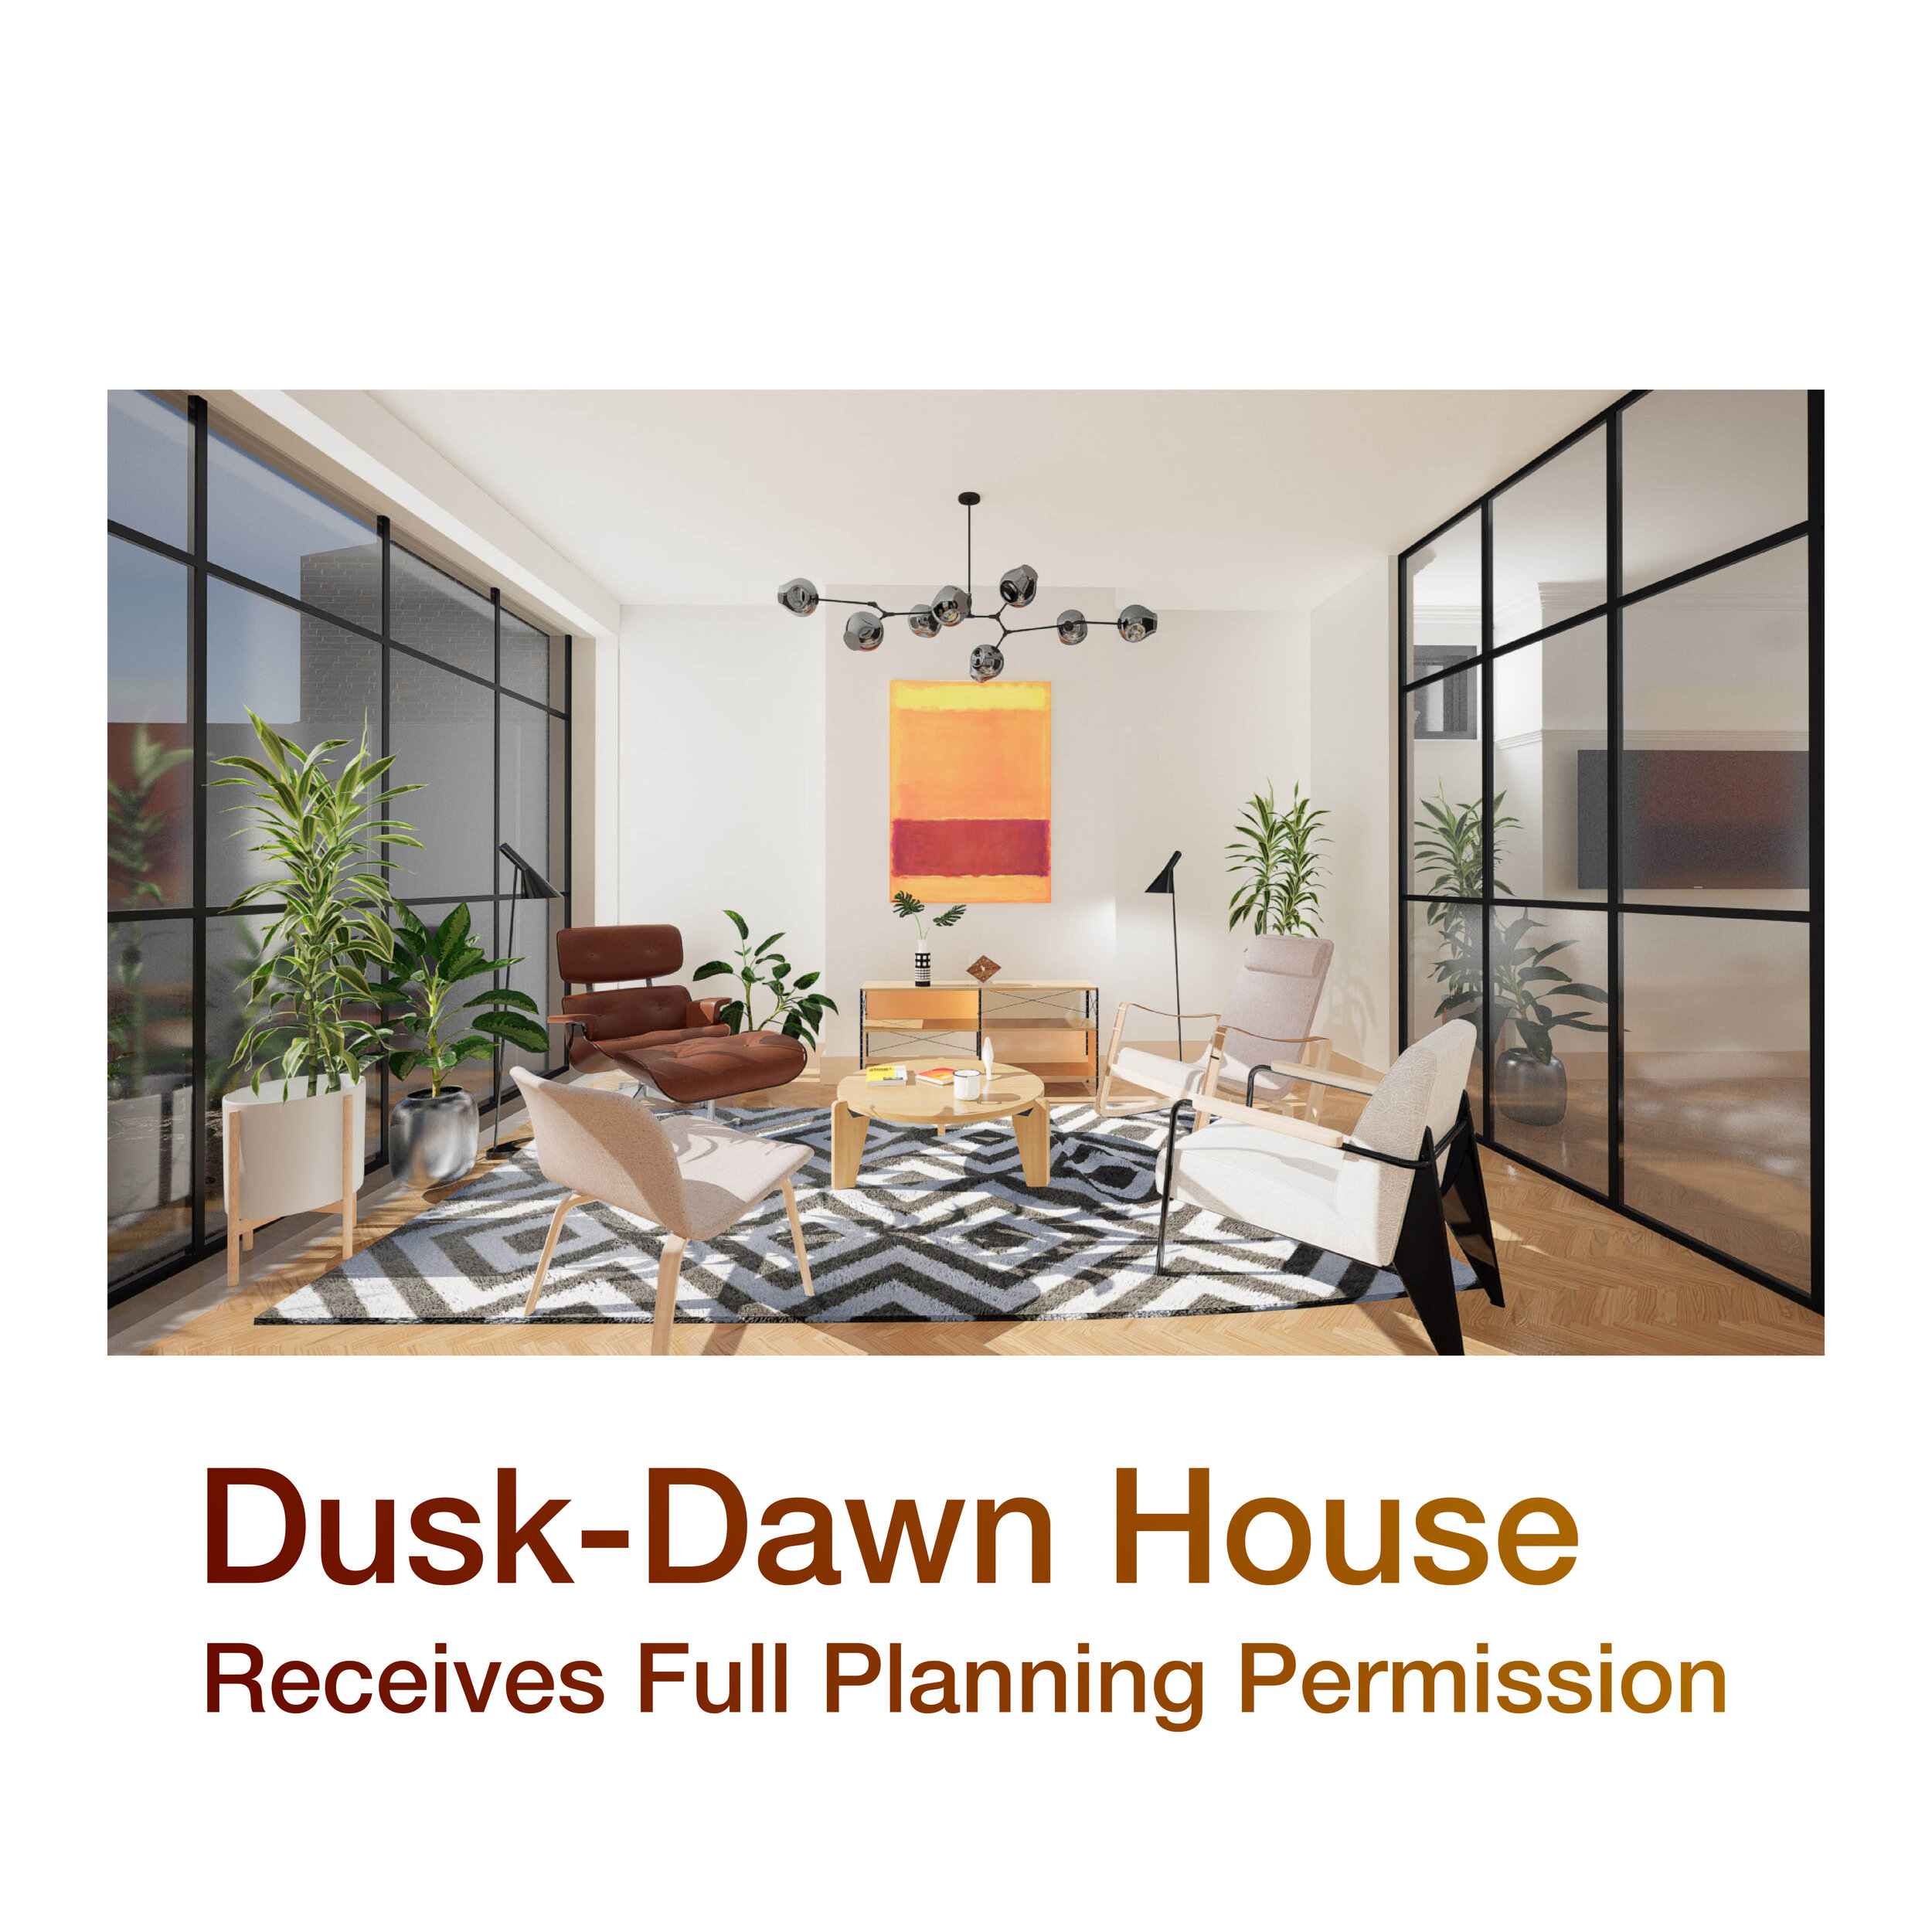 Dusk-Dawn House 3_Receives Full Planning Permission_Sustainable Cottingham Architects_Samuel Kendall Associates